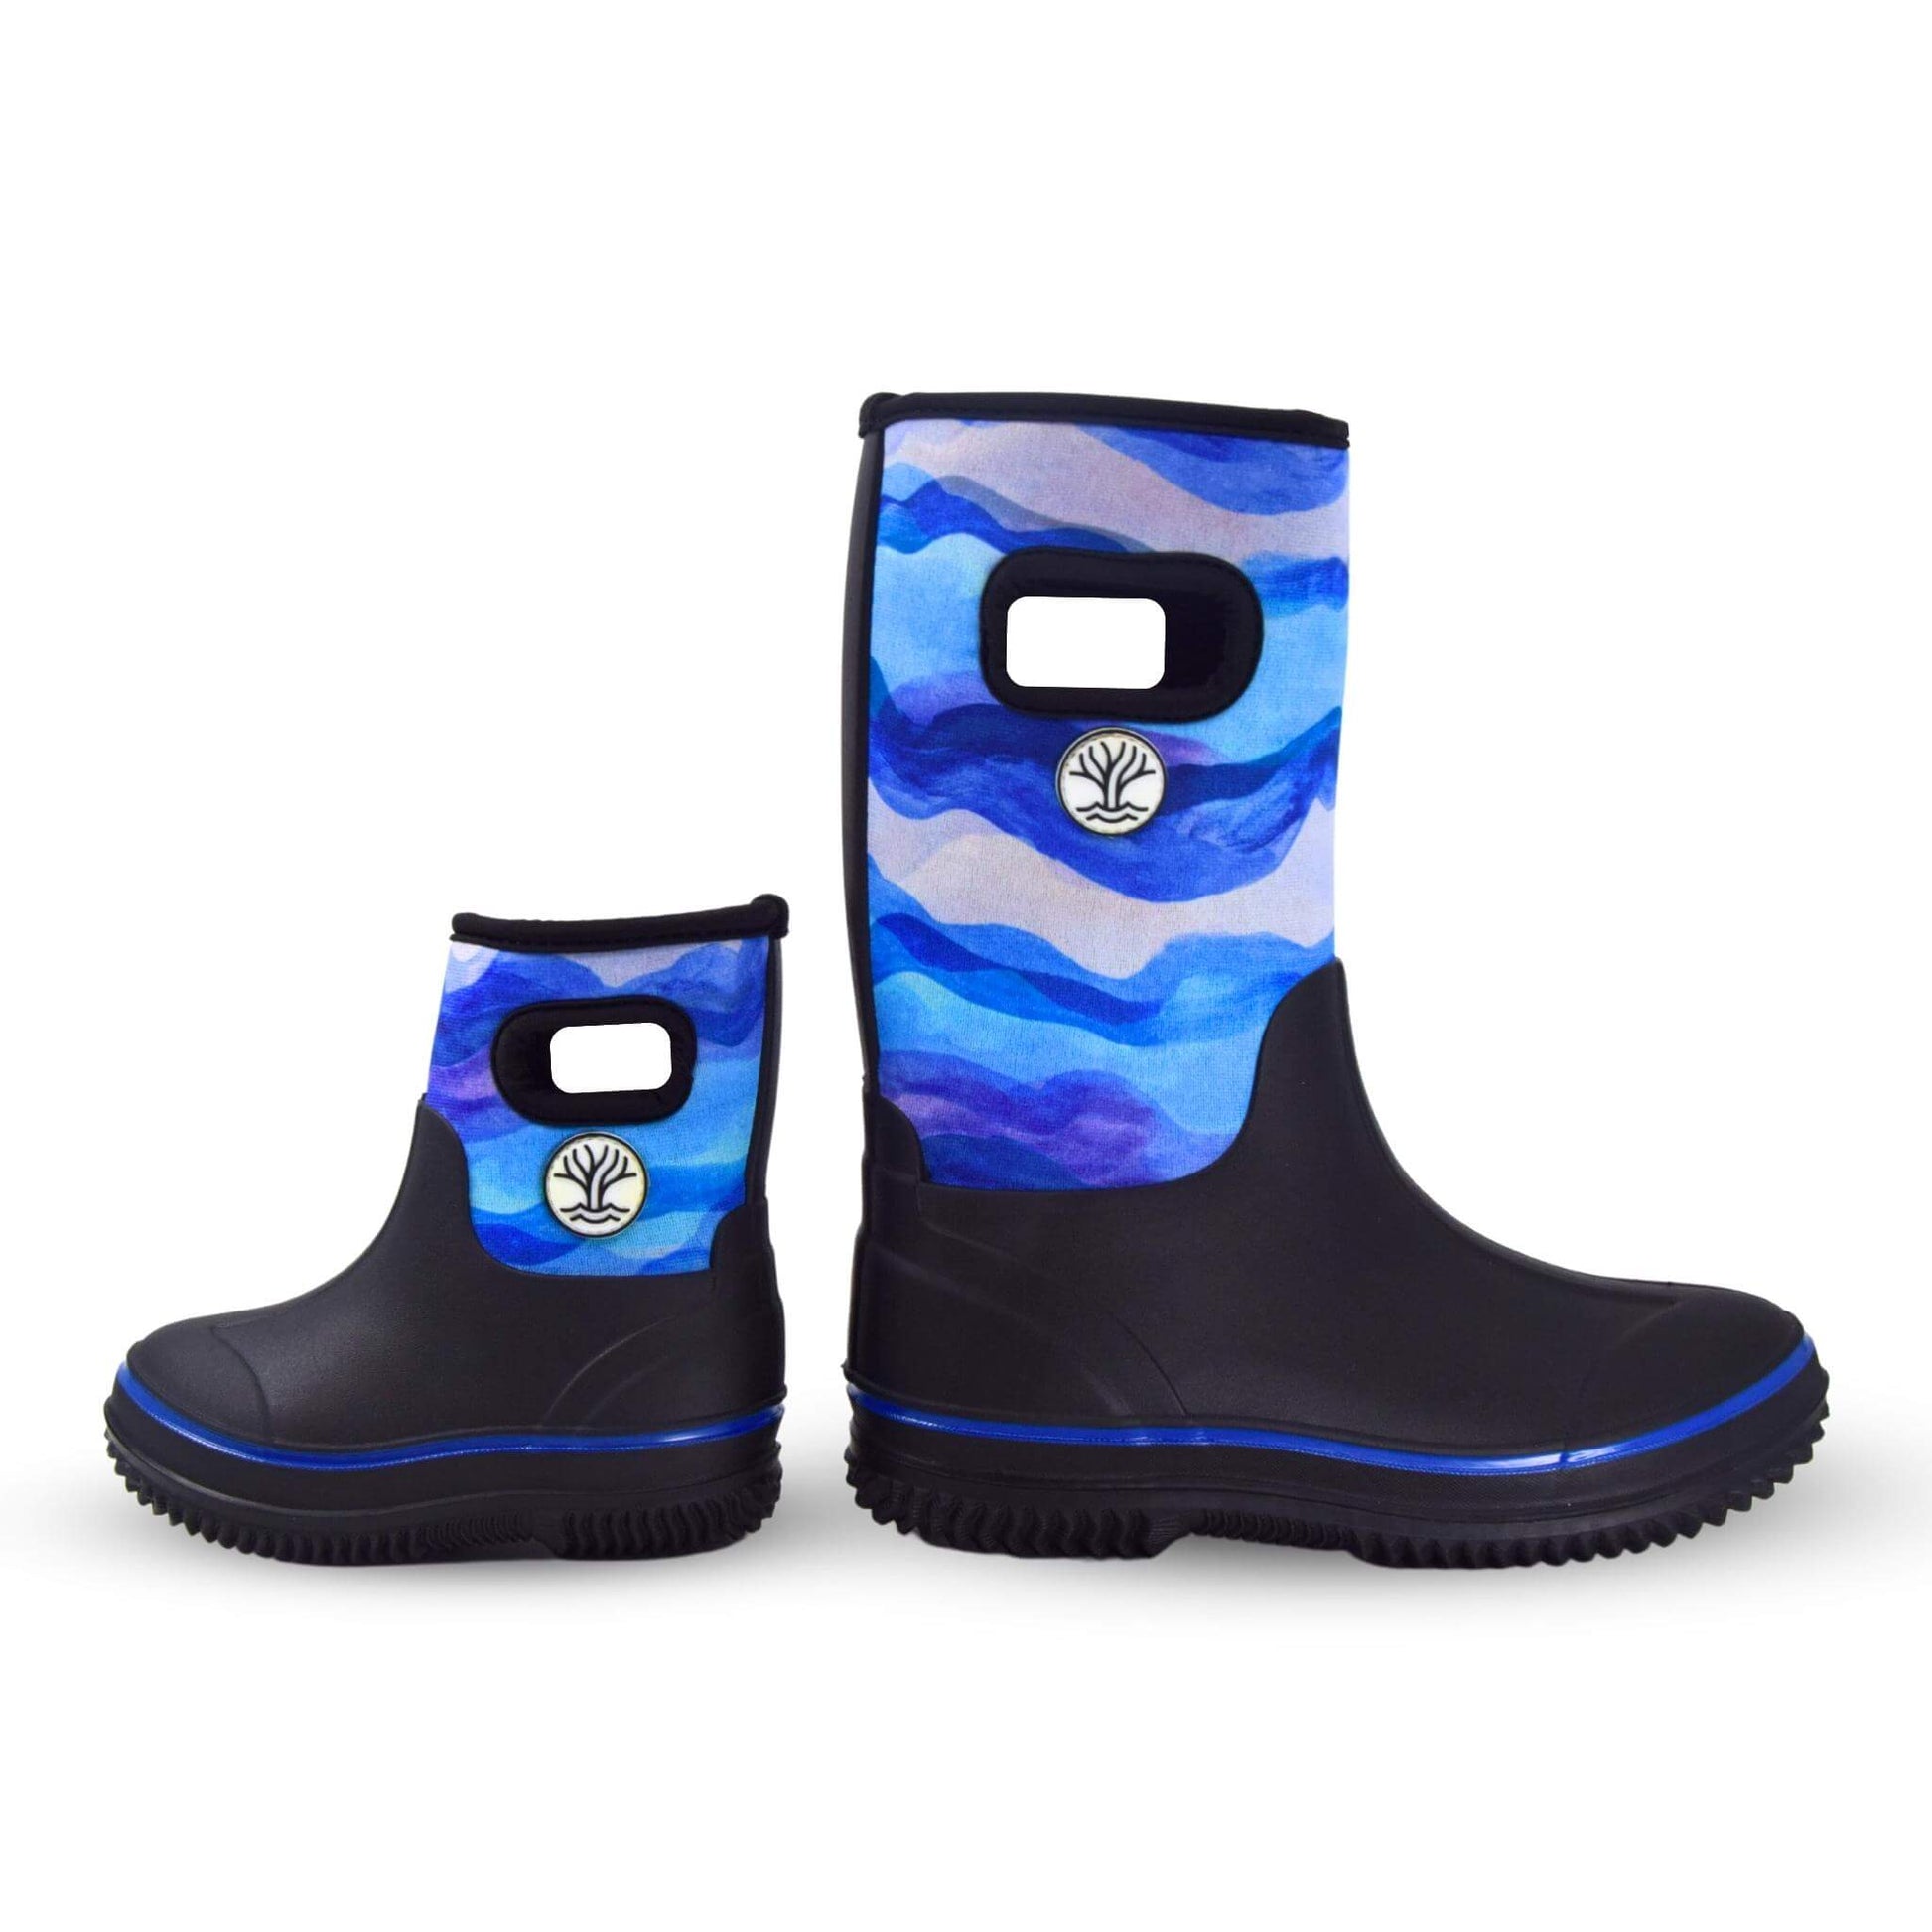 Wavetree Gumboot made of neoprene with blue wave design. Pair of waterproof rain boots.